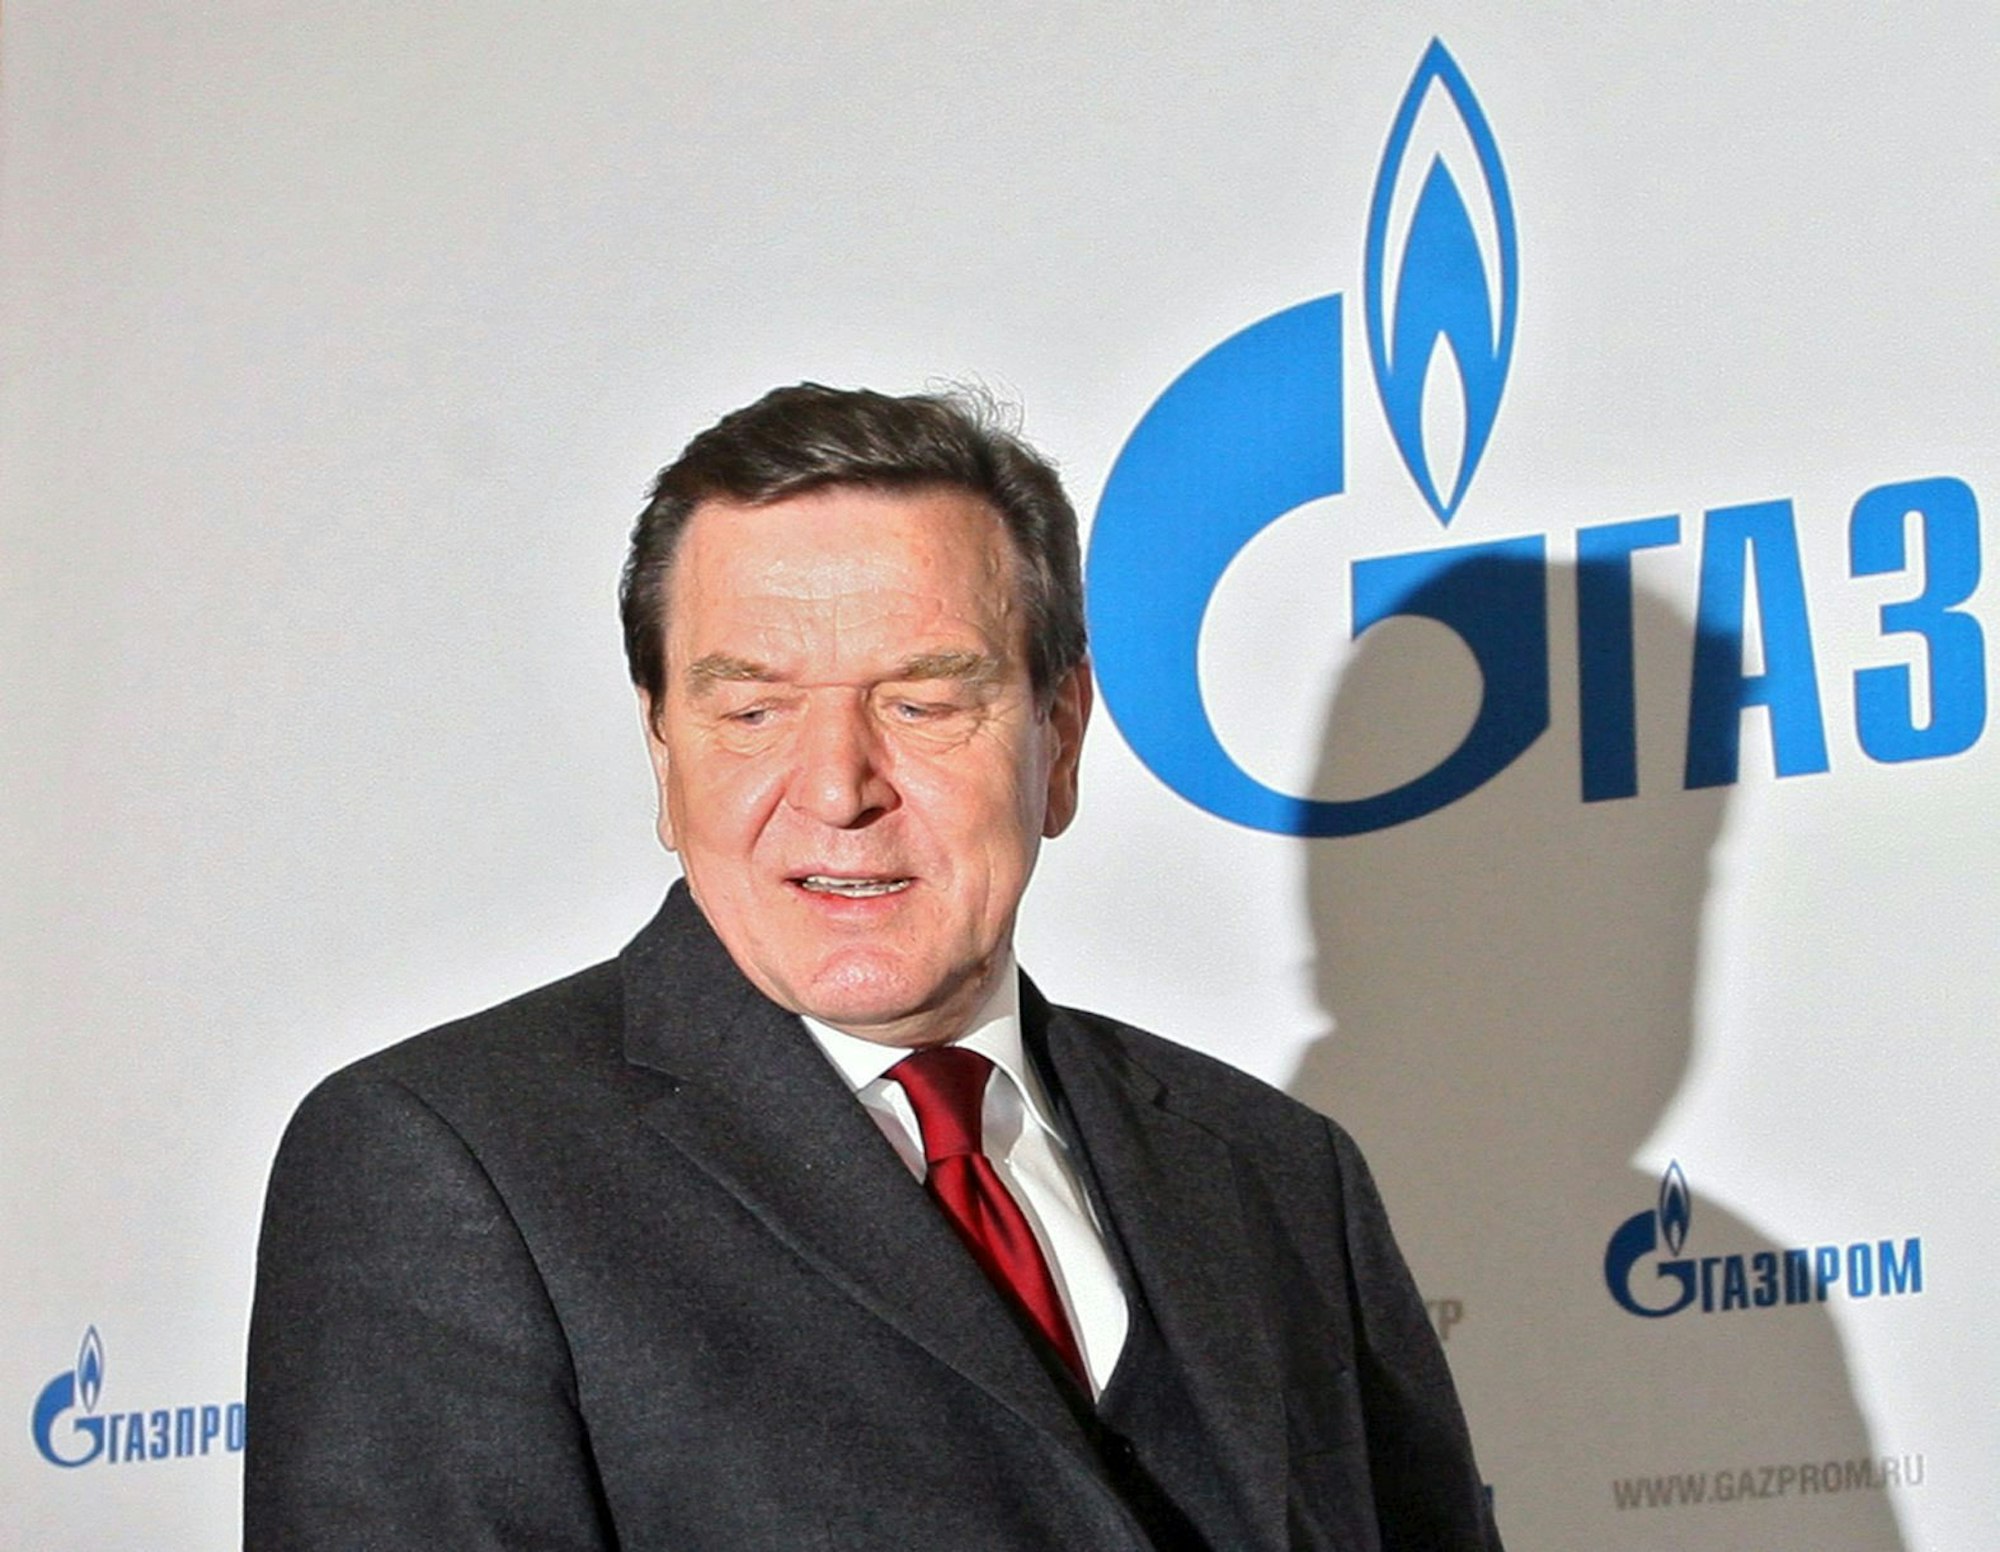 Gerd S. Gasprom